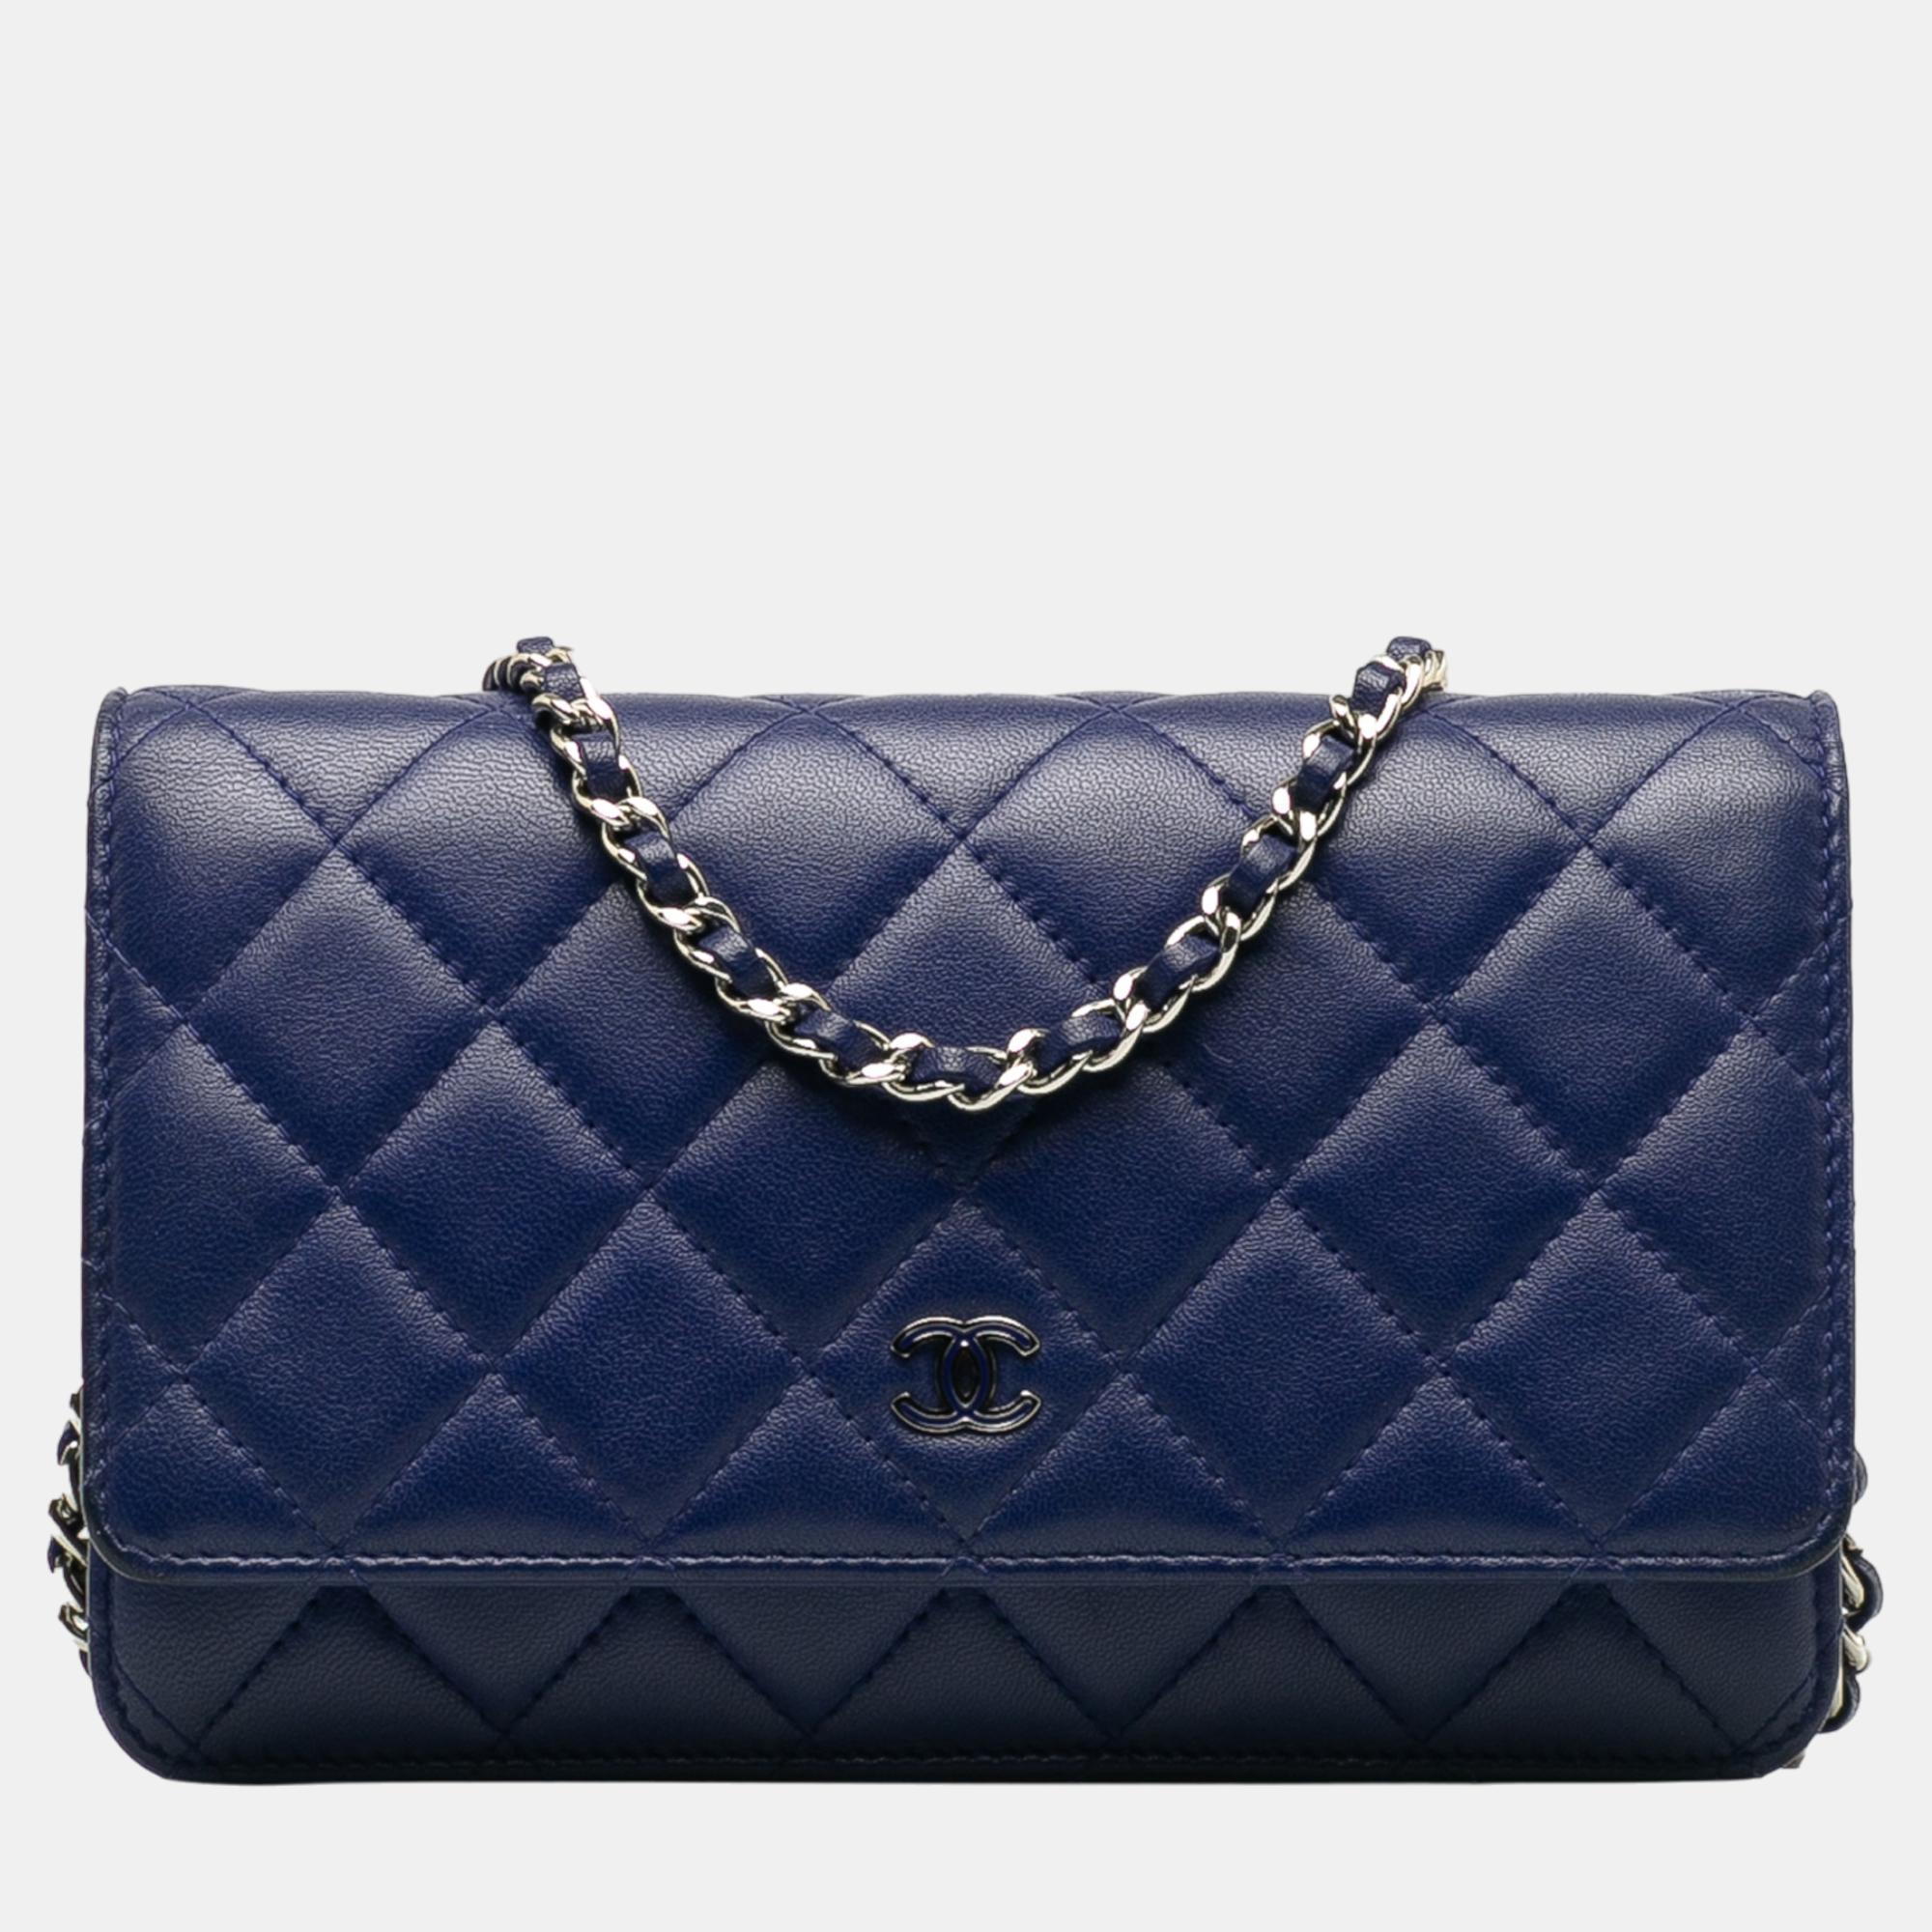 Chanel navy blue classic lambskin wallet on chain